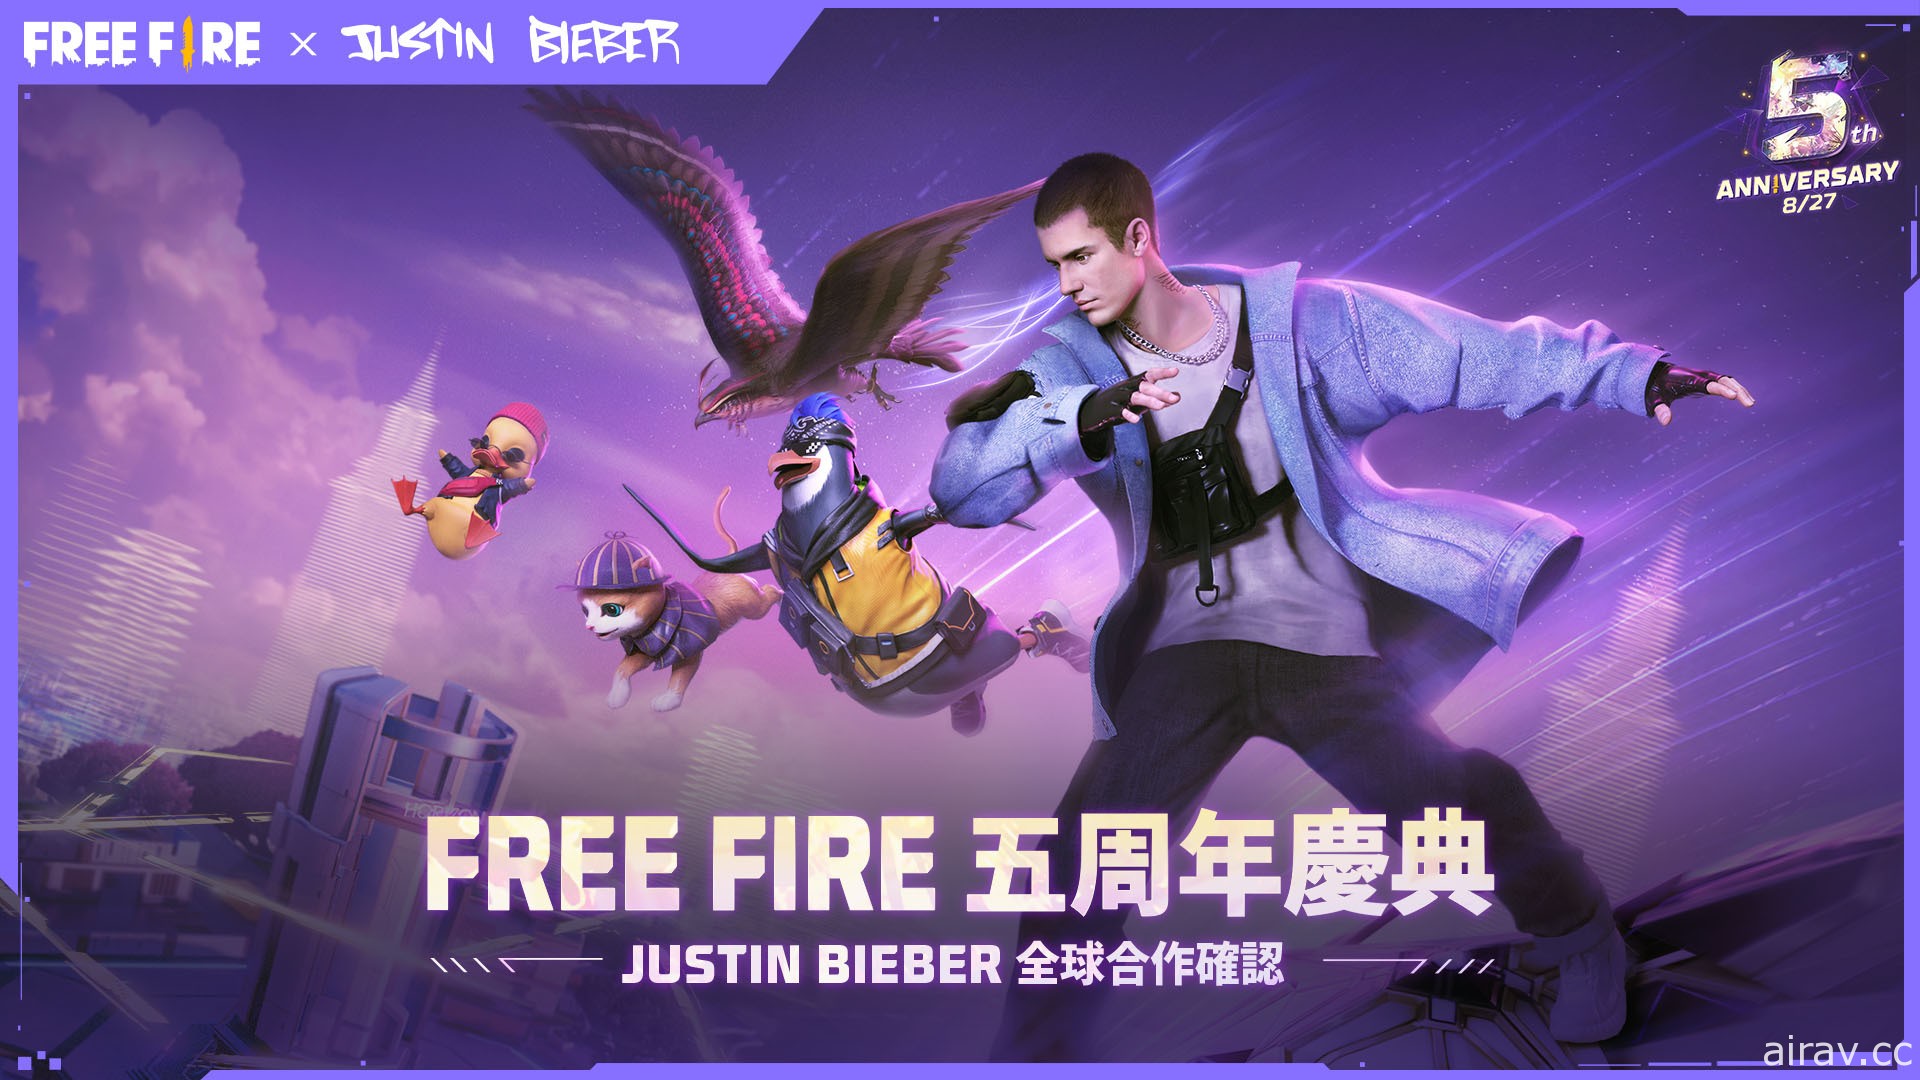 《Free Fire - 我要活下去》宣布与全球巨星 Justin Bieber 携手庆祝五周年庆典